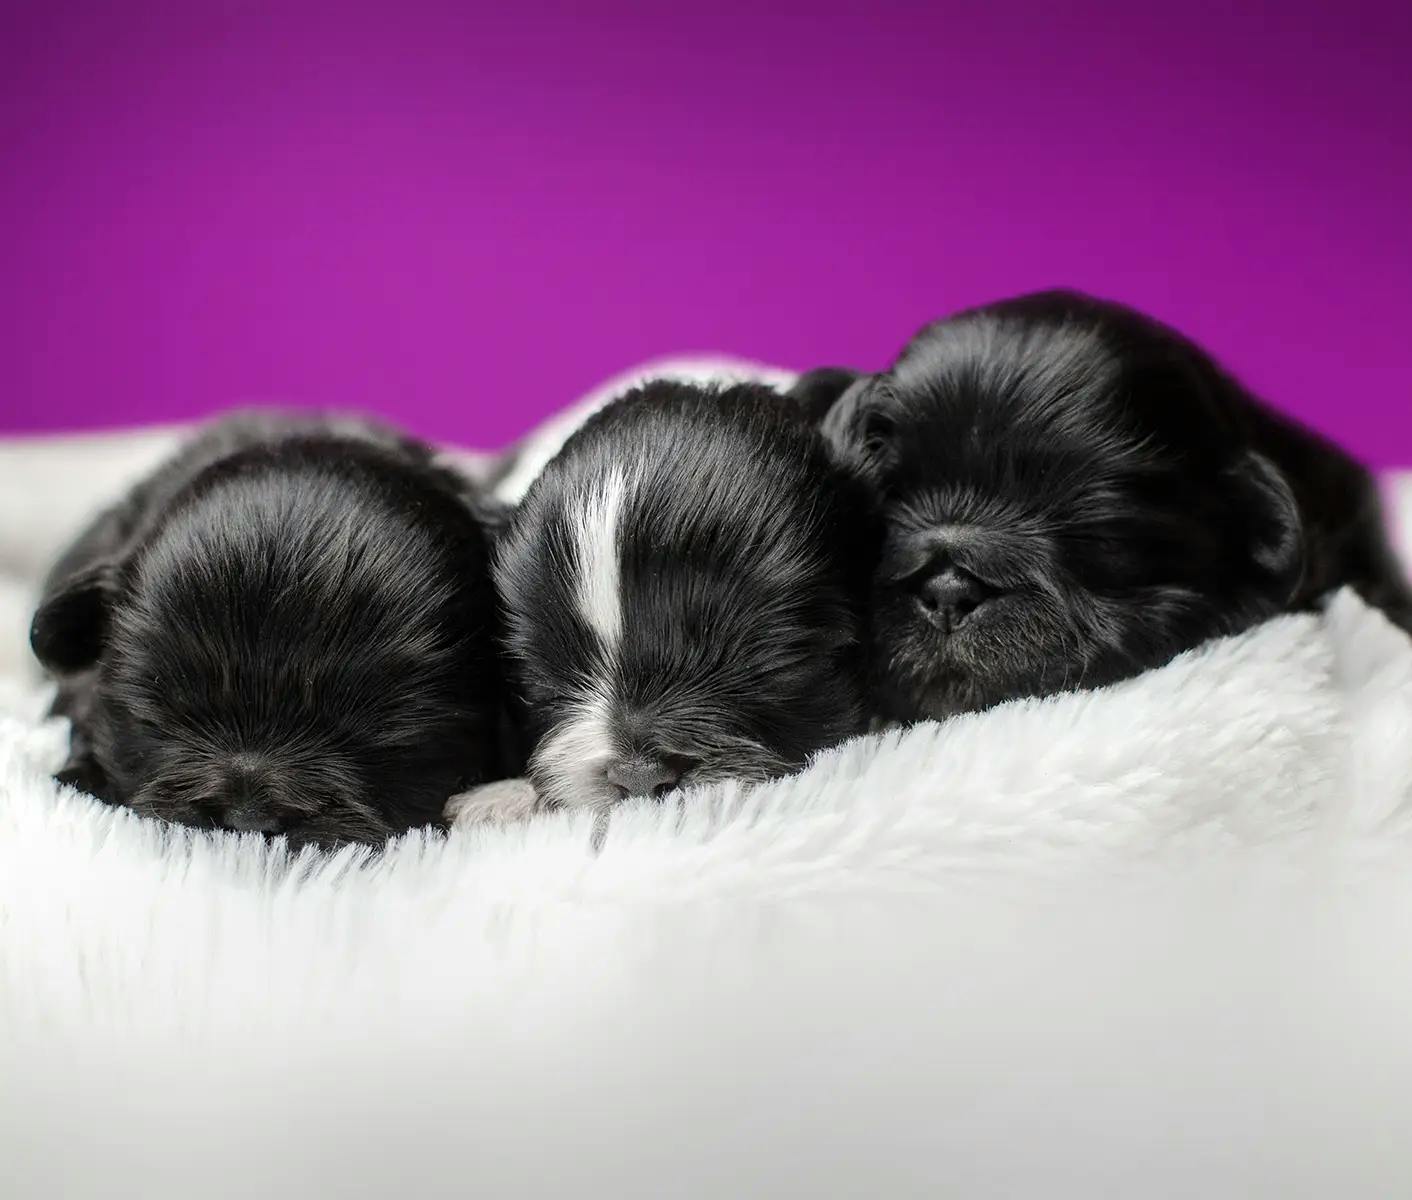 3 newborn puppies